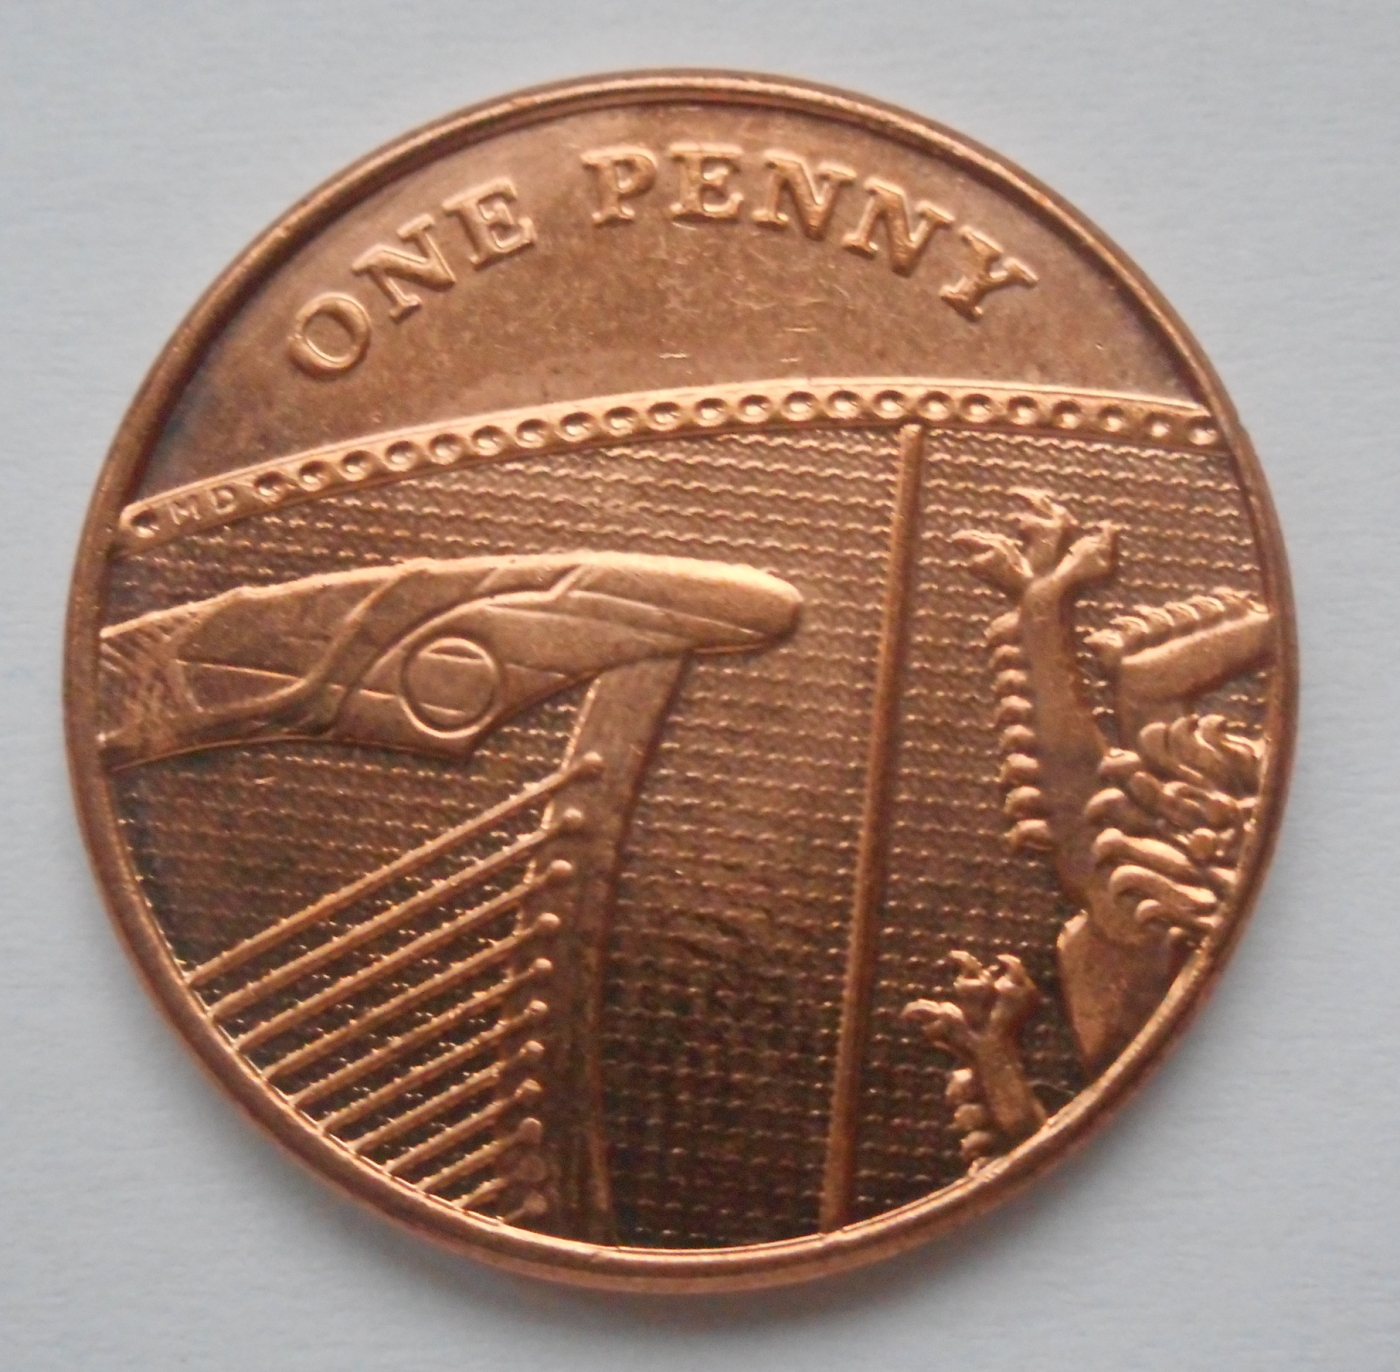 1 Penny 2015, Elizabeth II (1952-present) - Great Britain ...